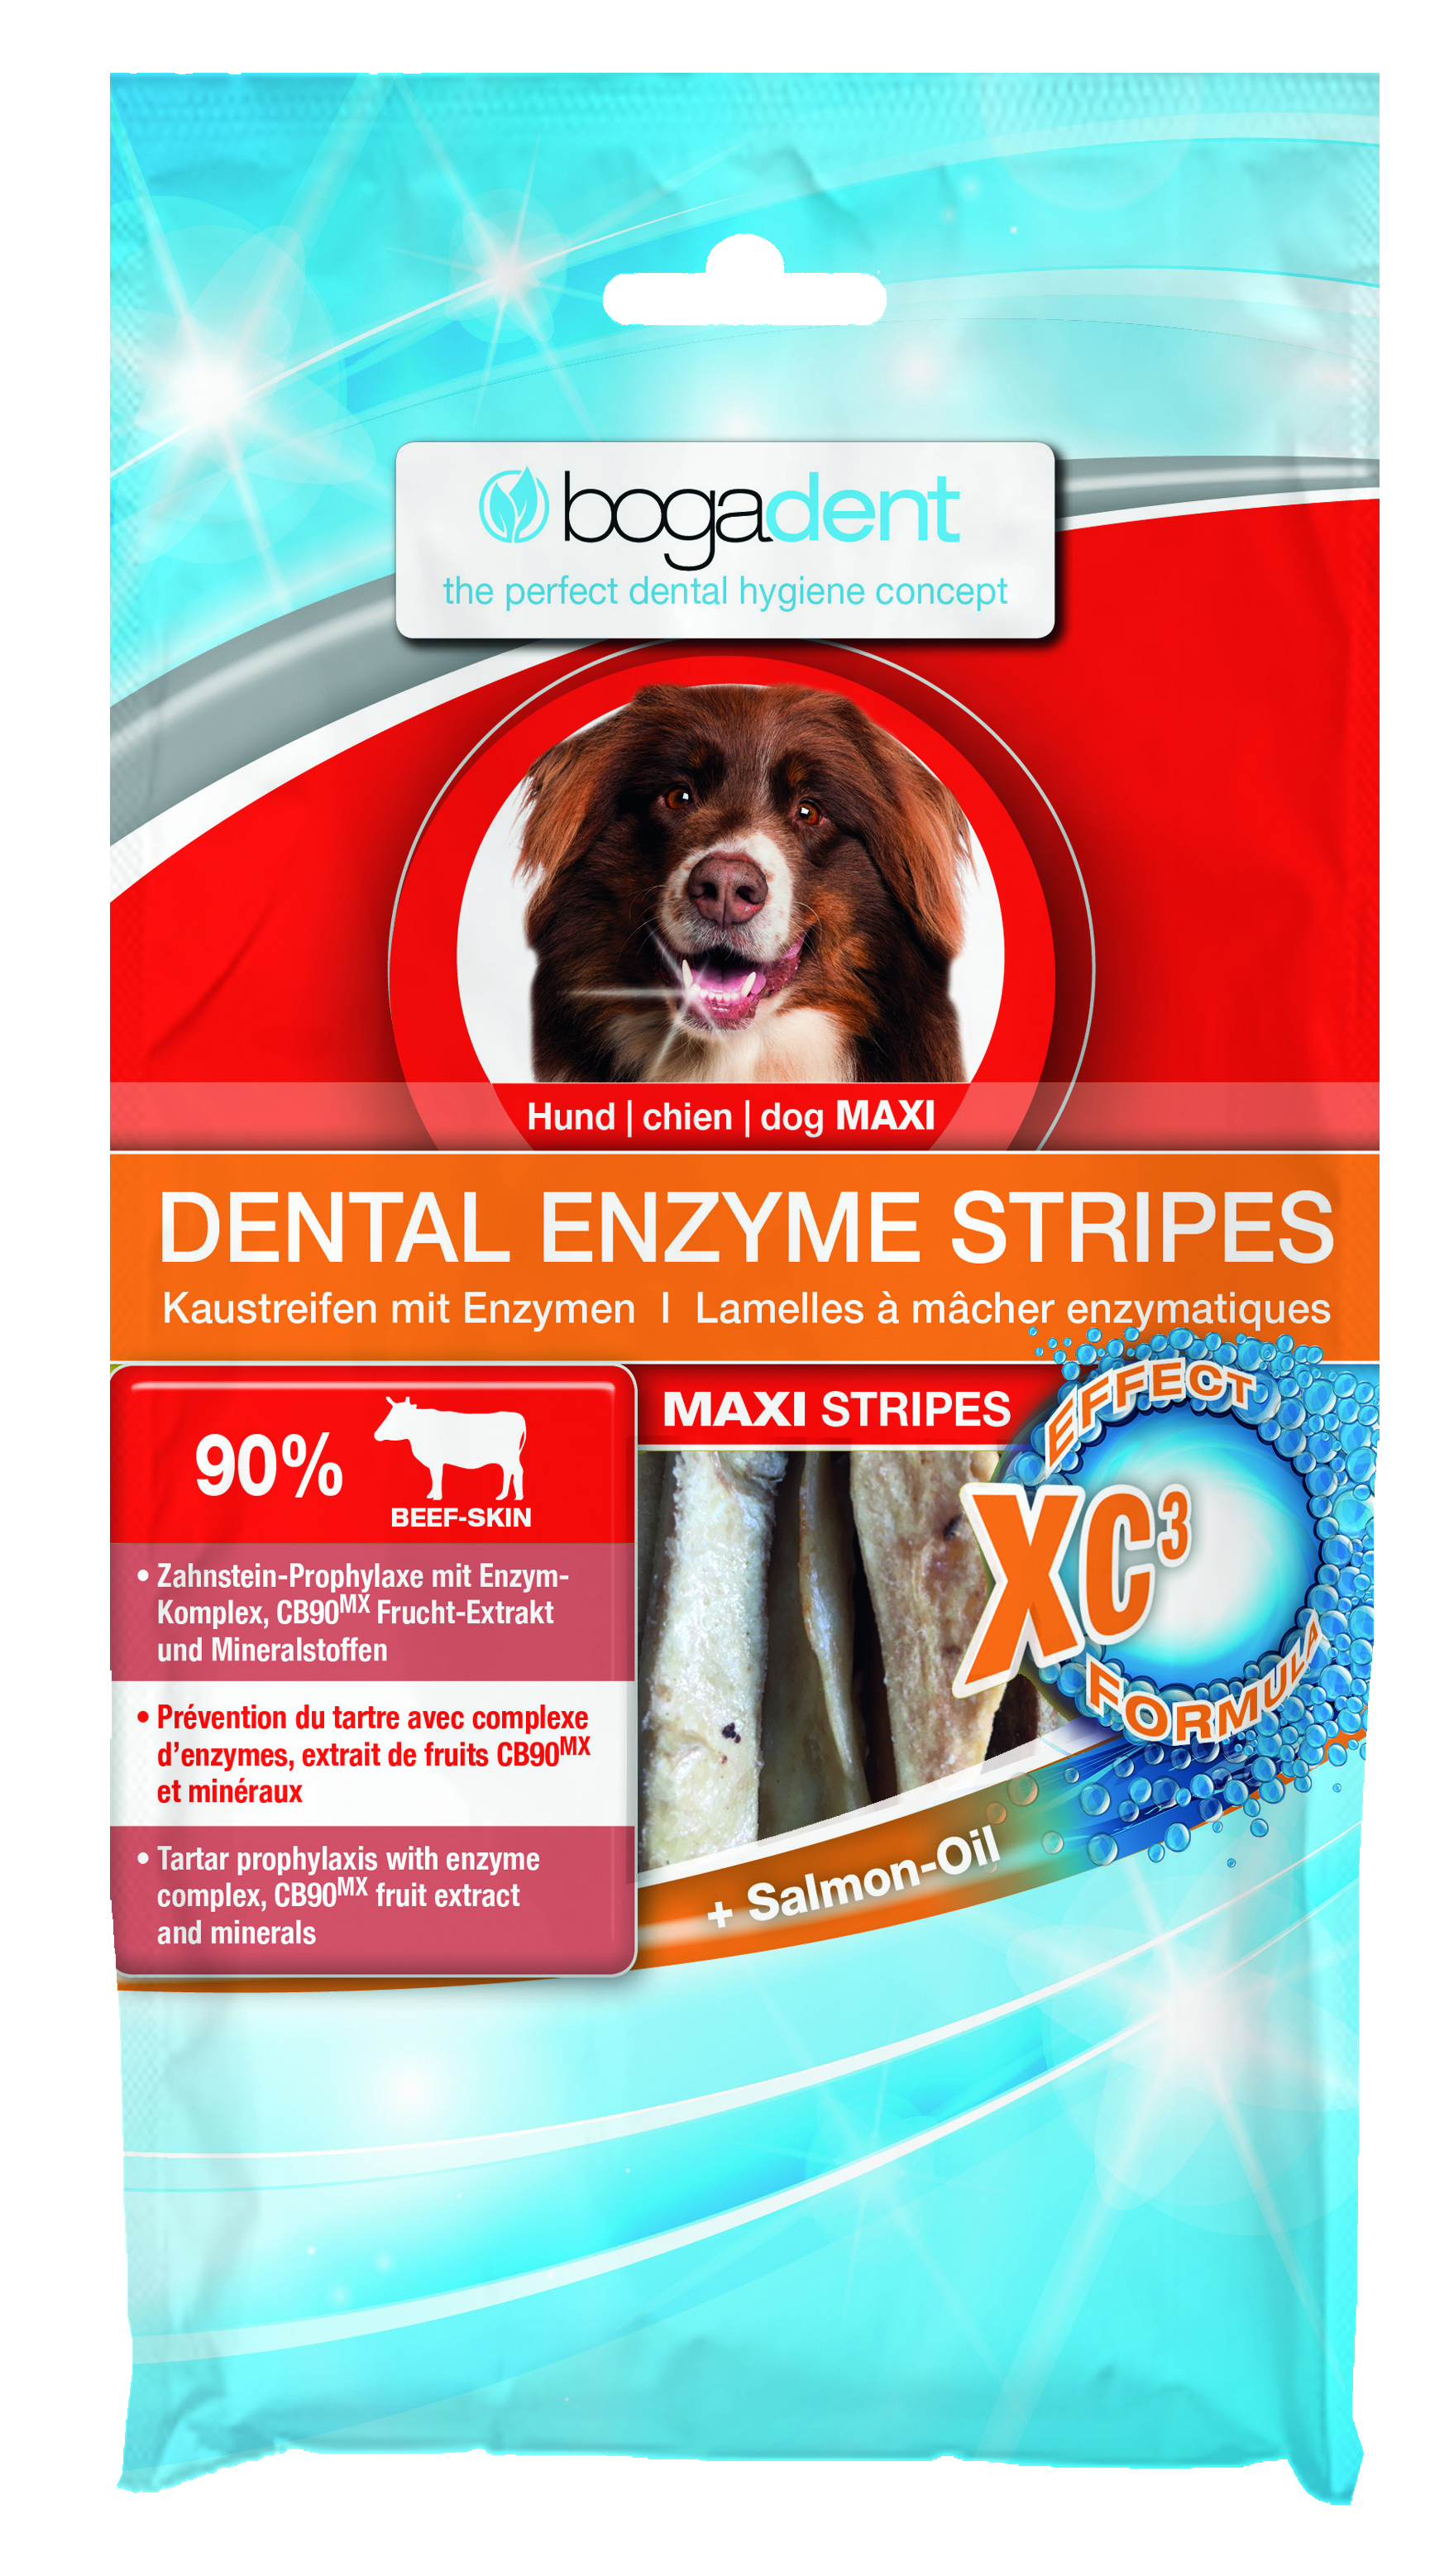 bogadent Dental Enzyme Stripes Hund Maxi 100g